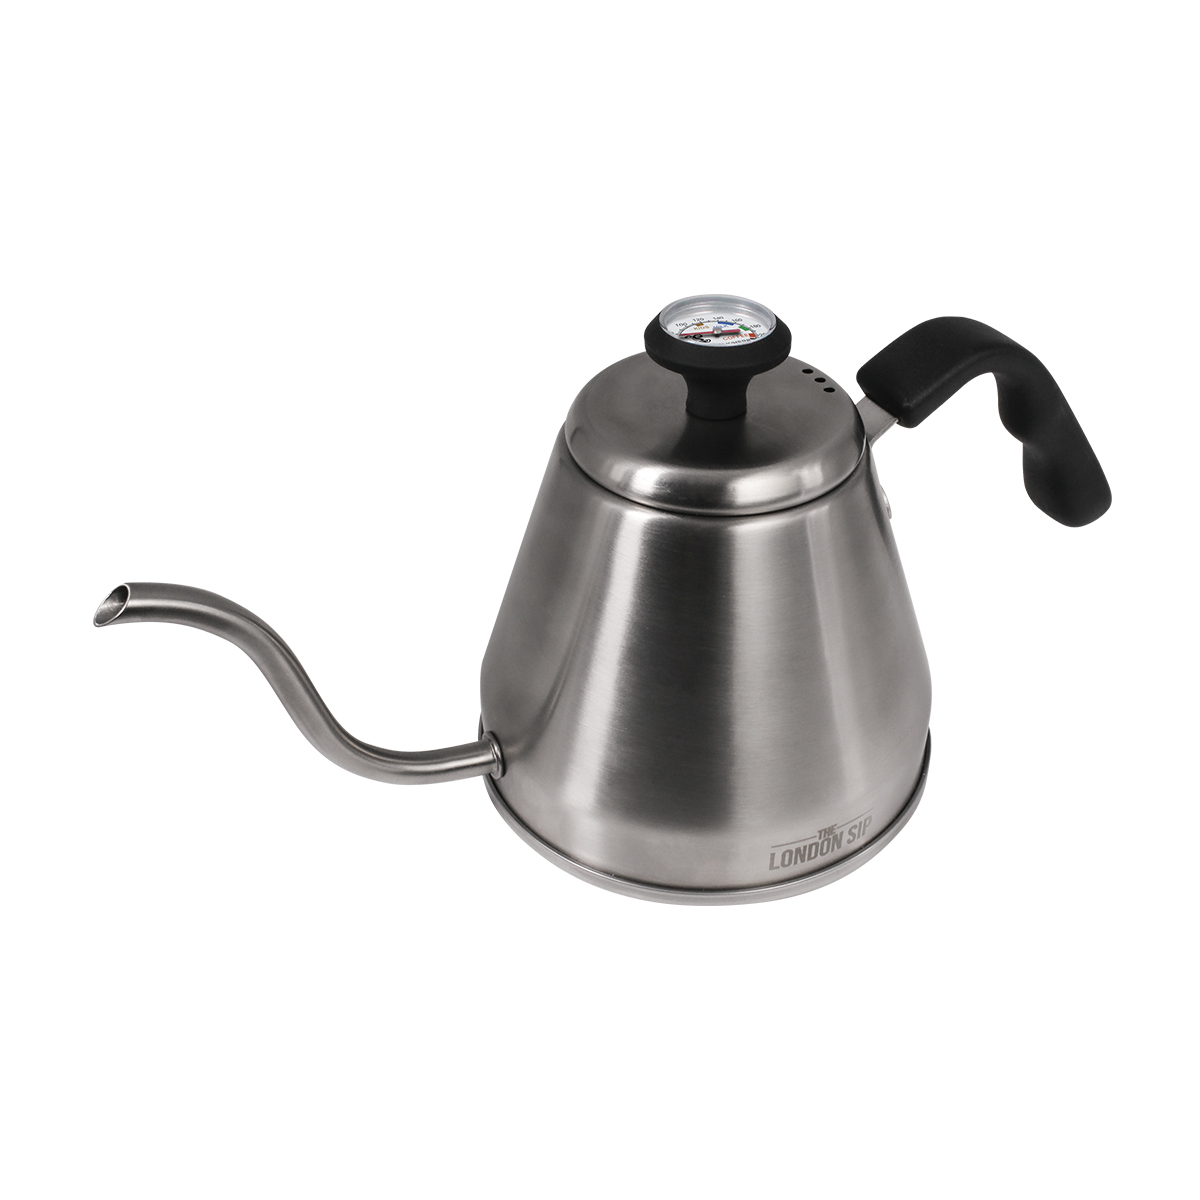 https://www.homepagenews.com/wp-content/uploads/2022/02/escali-tea-kettle.jpg